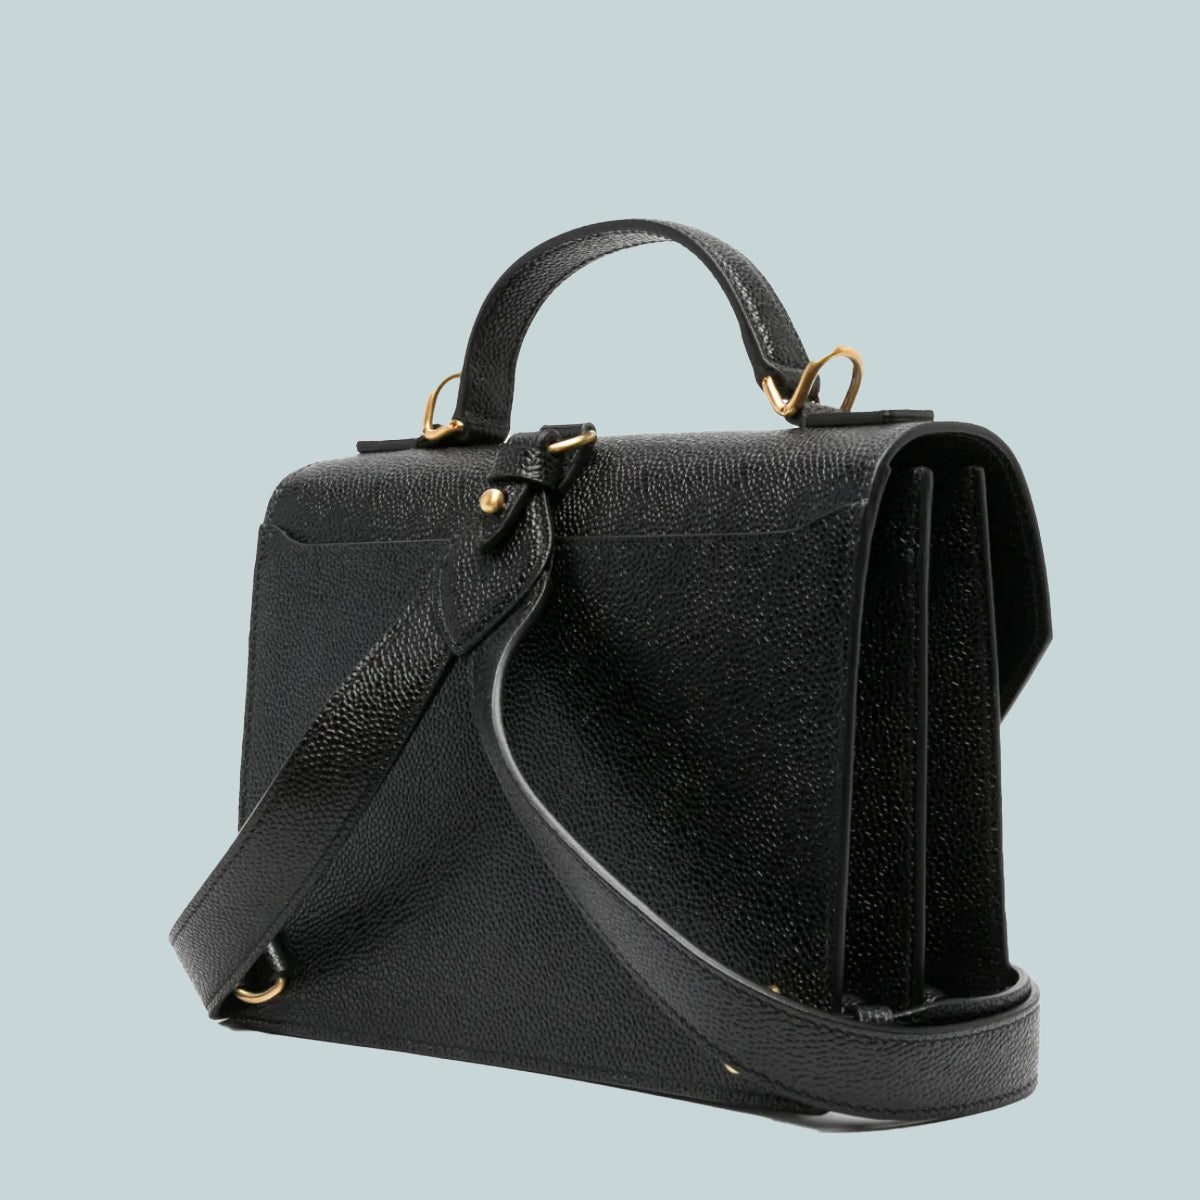 Small School Bag w/ Top Handle In Pebble Grain Leather Black